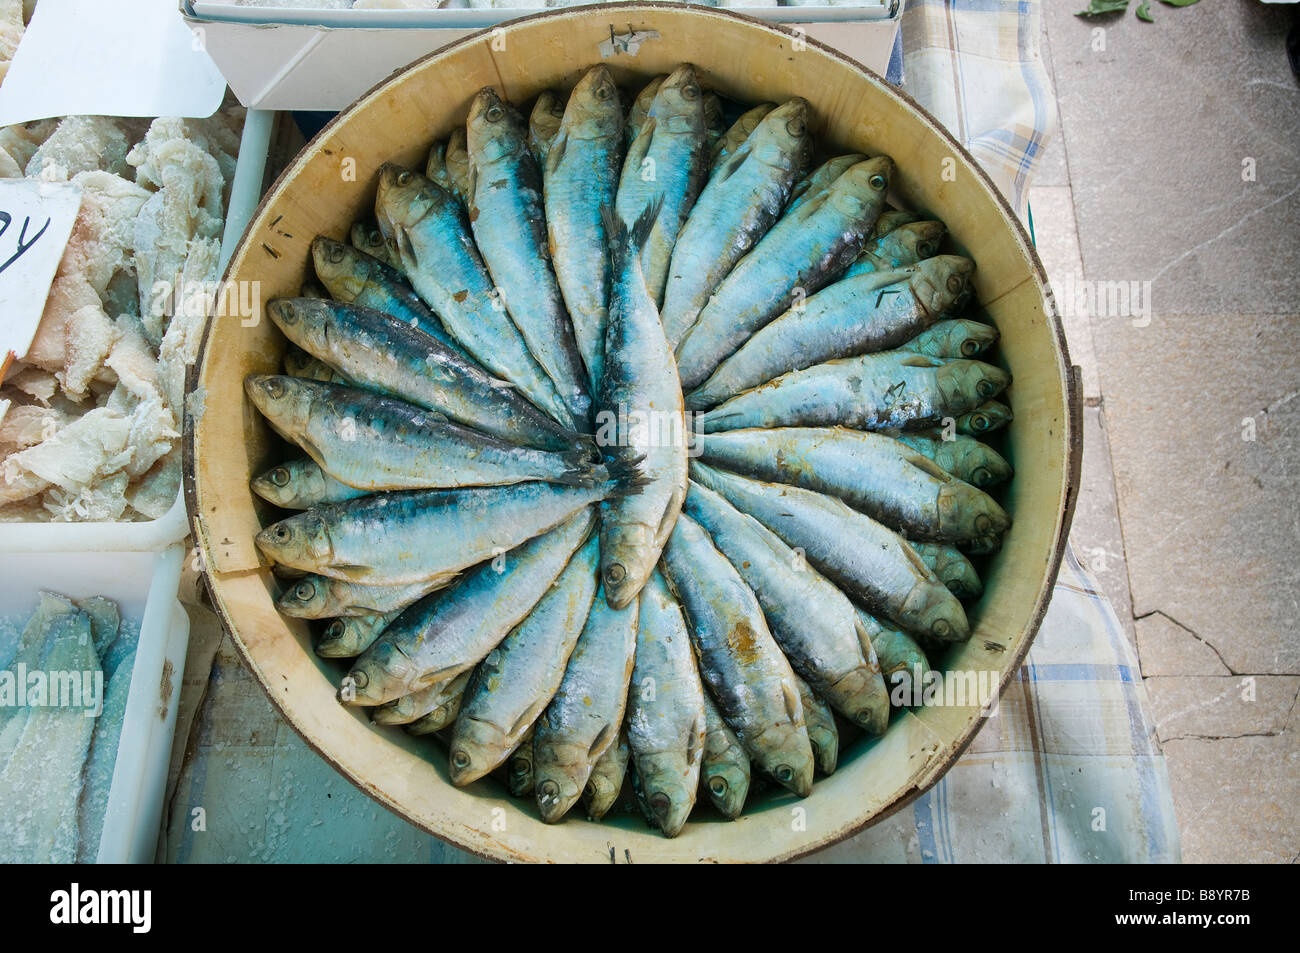 Europe Spain Balearic Islands Majorca Sineu market Sardines Stock Photo